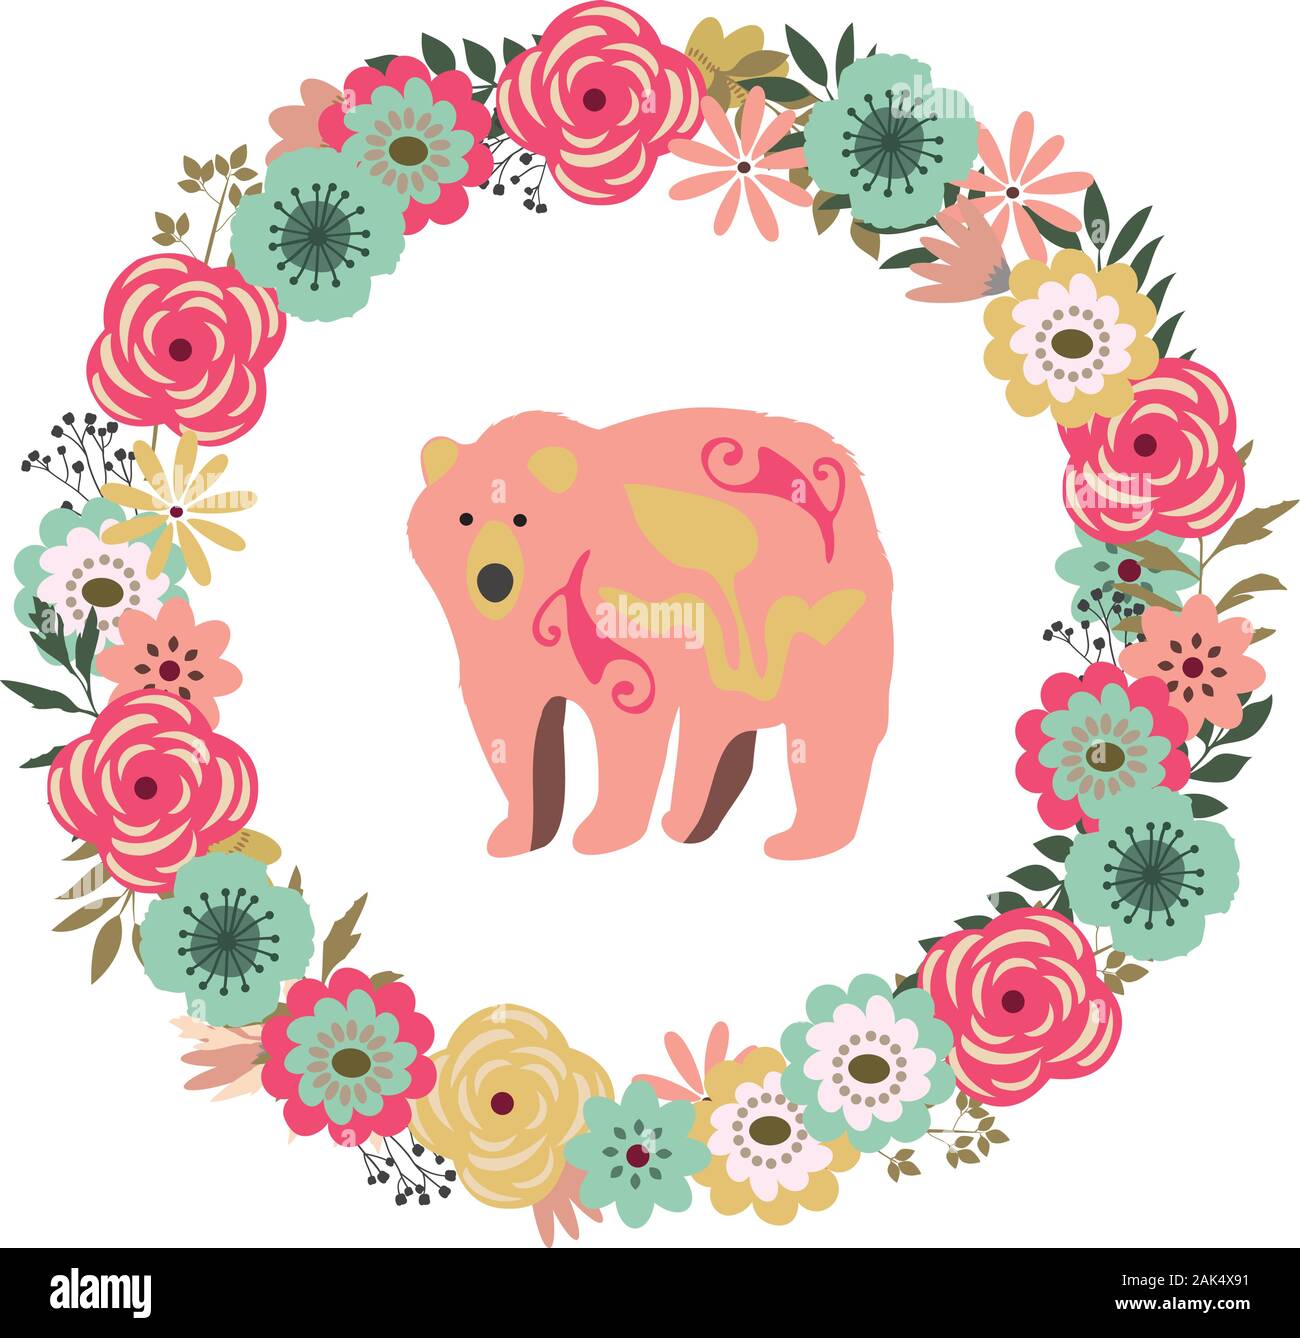 https://c8.alamy.com/comp/2AK4X91/vector-illustration-of-a-floral-vintage-frame-with-a-vintage-bear-retro-flowers-background-2AK4X91.jpg